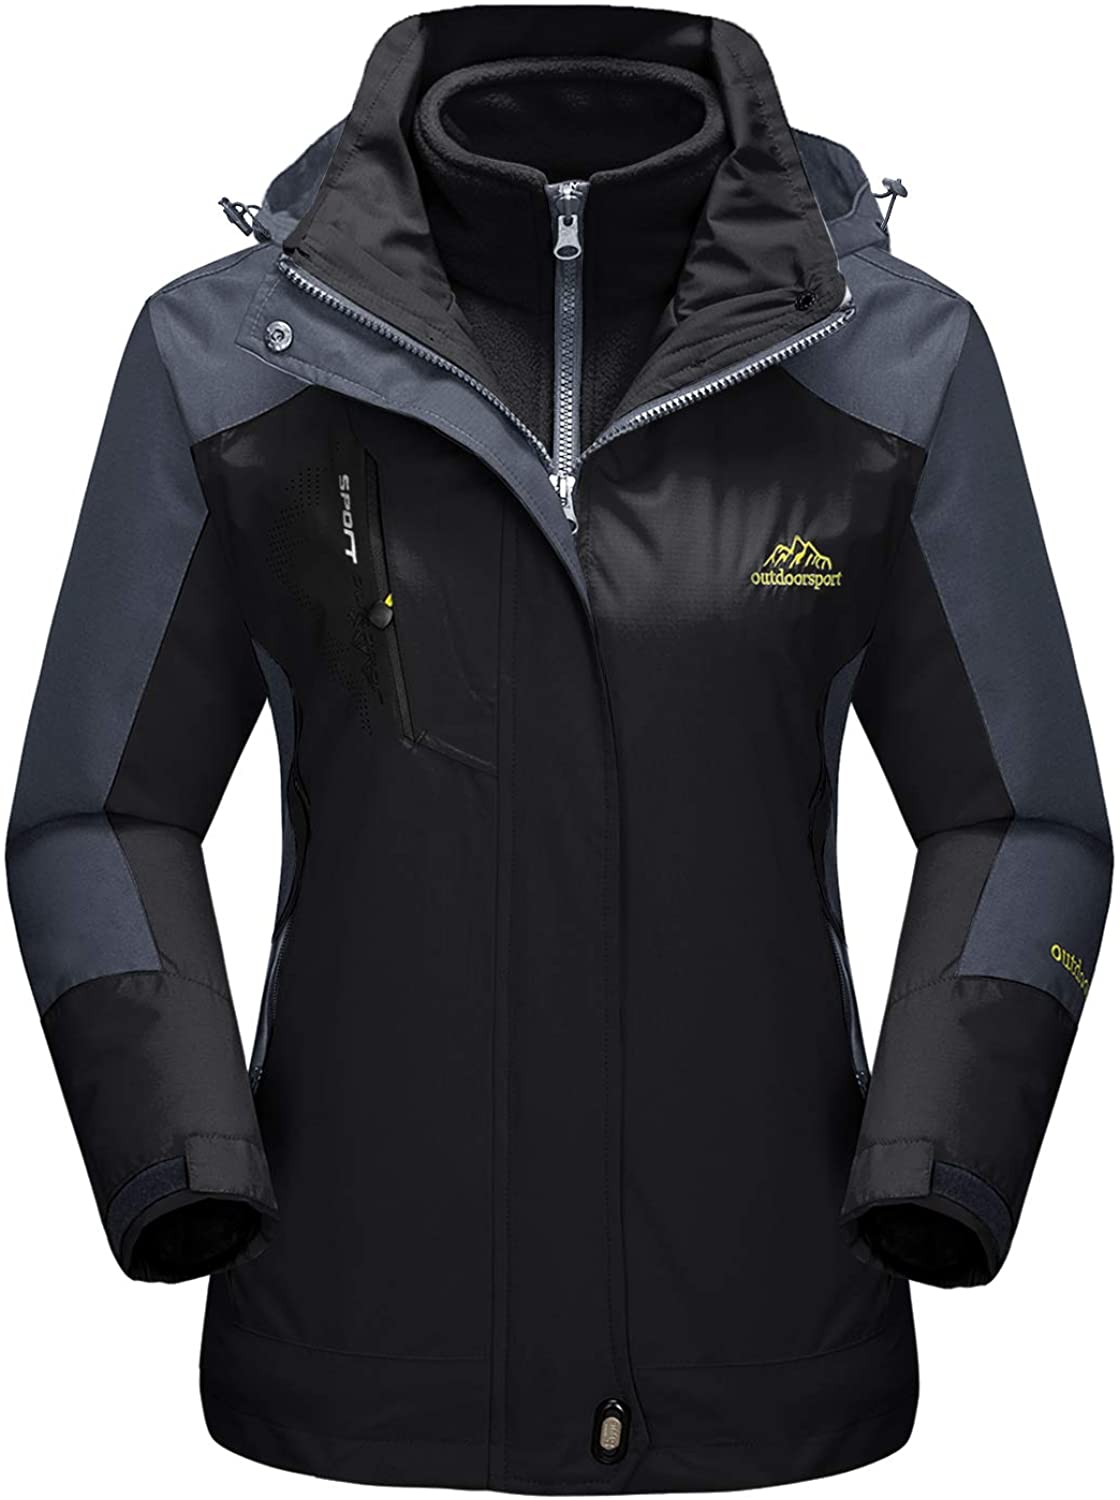 Womens Ski Jacket for Winter 3 in 1 Waterproof Windproof Snow Hooded Jacket with Warm Fleece Liner Jacket